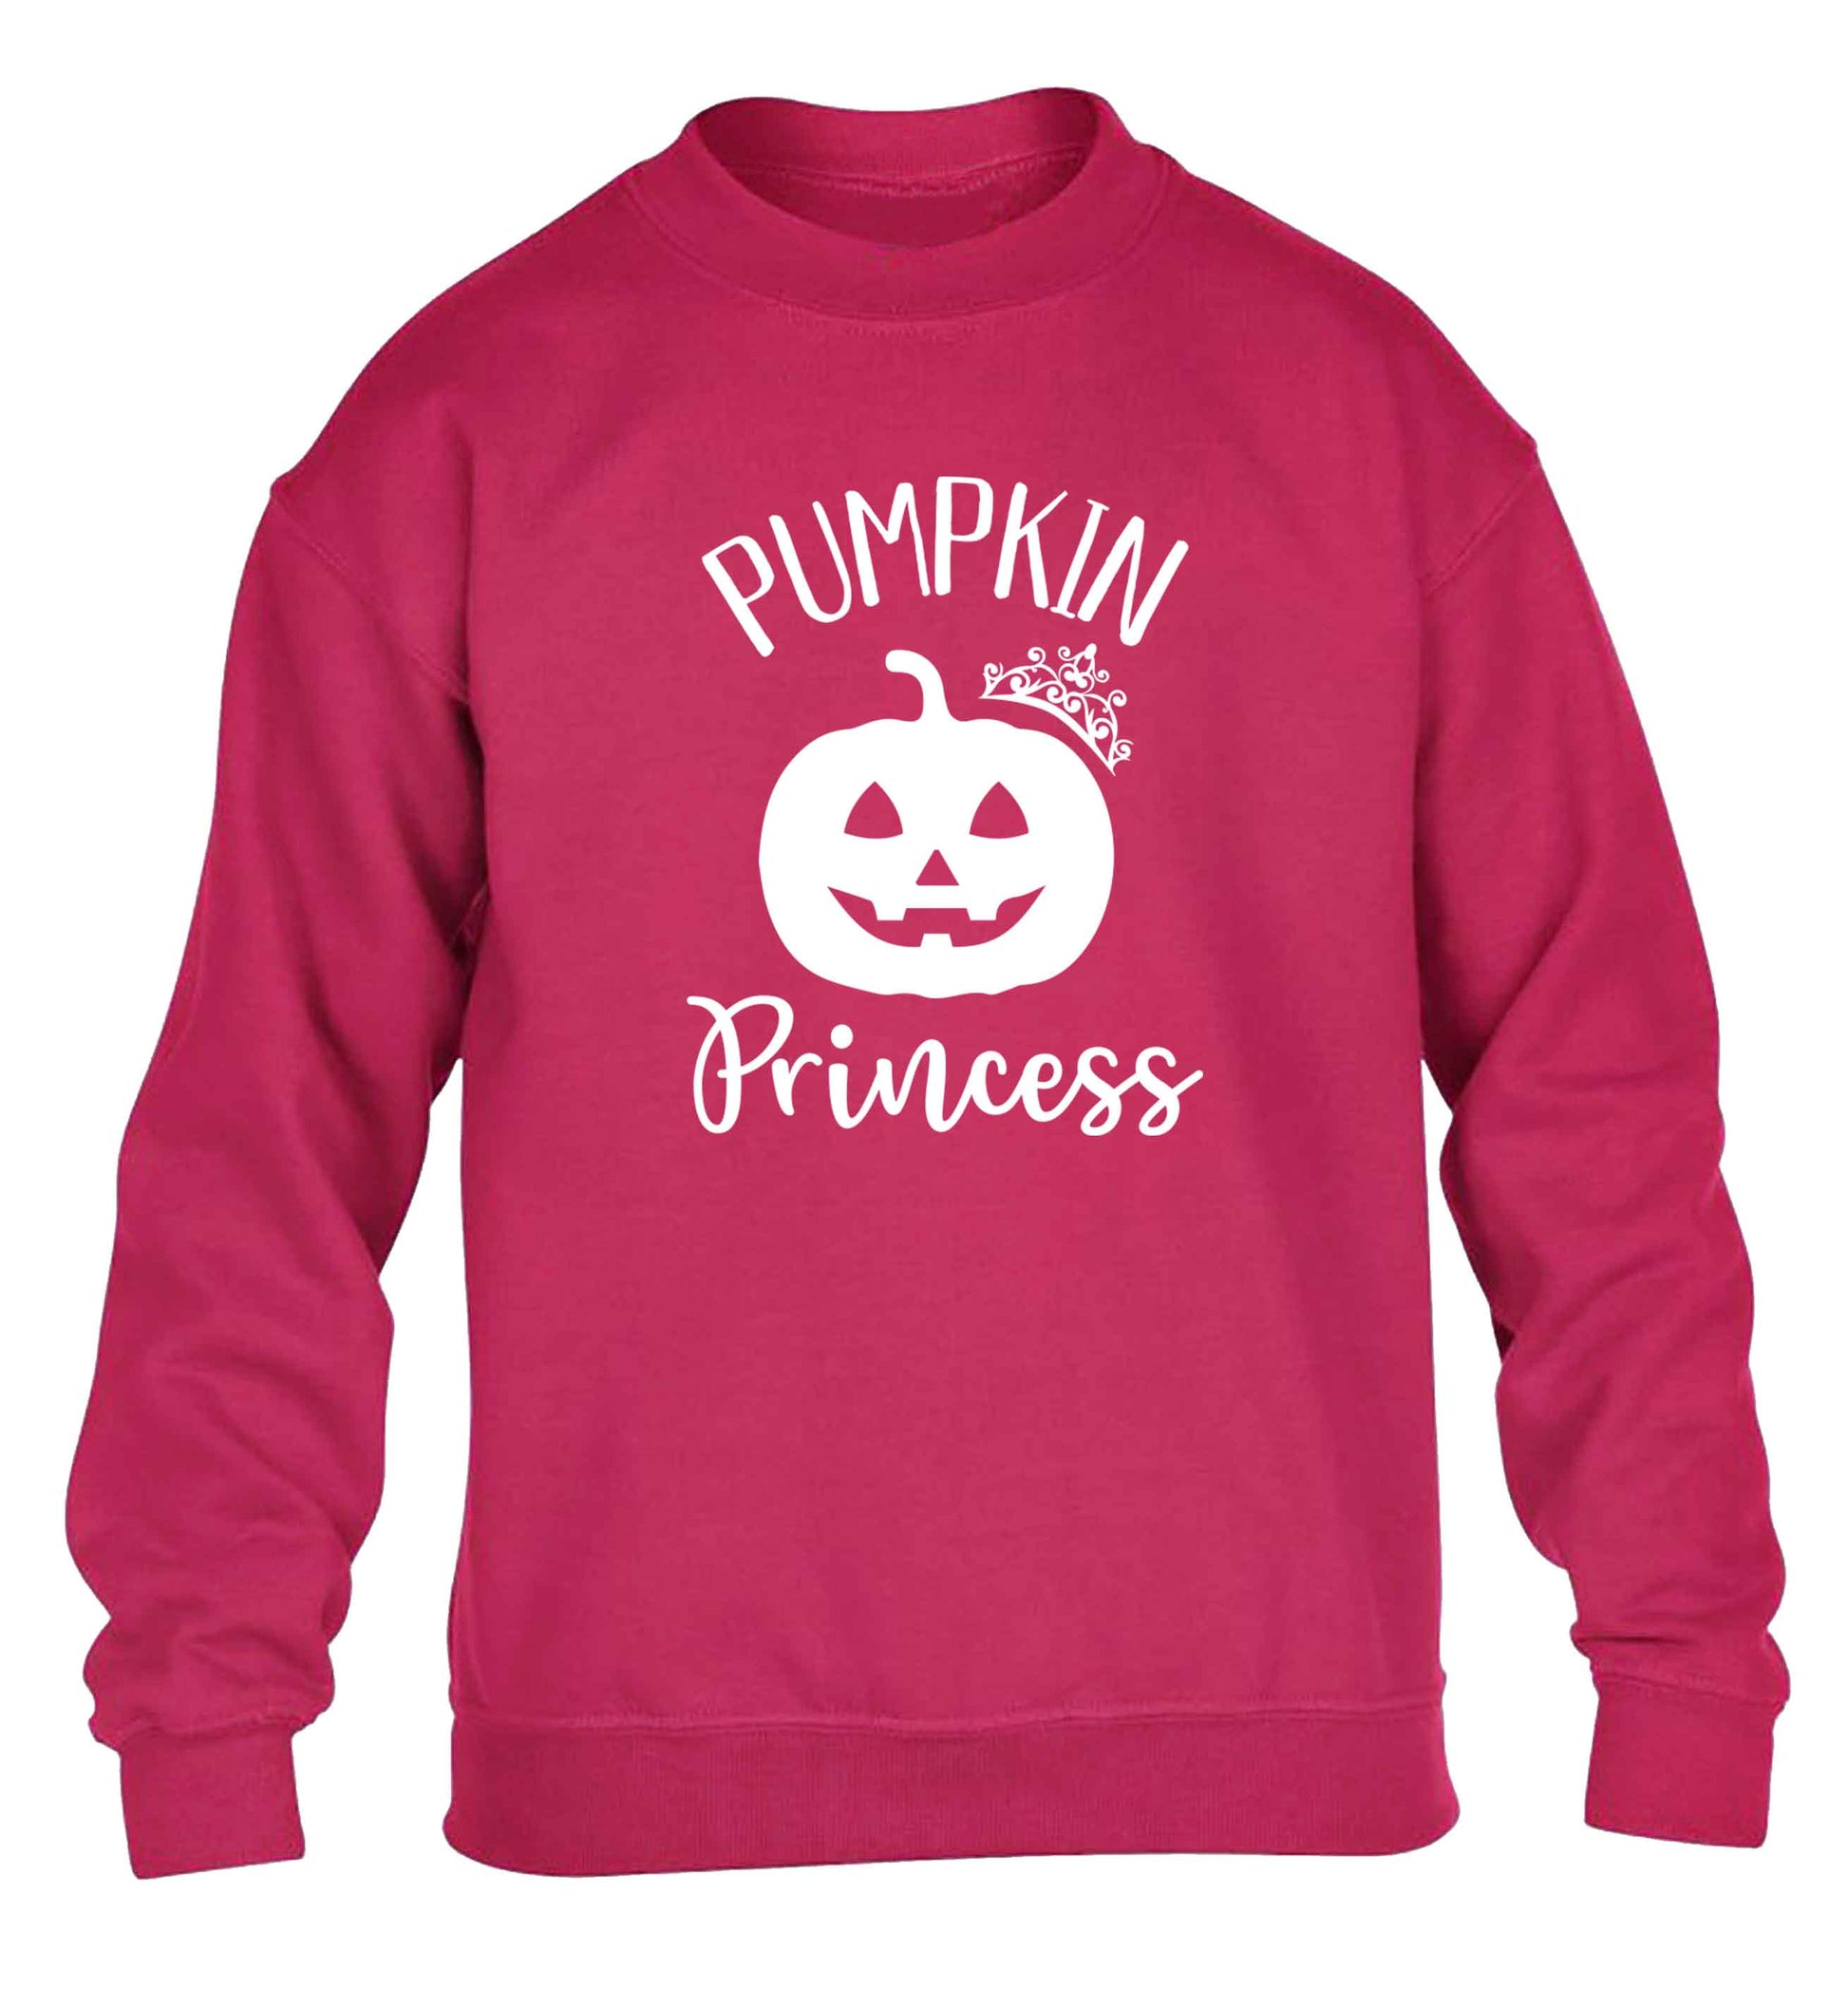 Happiness Pumpkin Spice children's pink sweater 12-13 Years